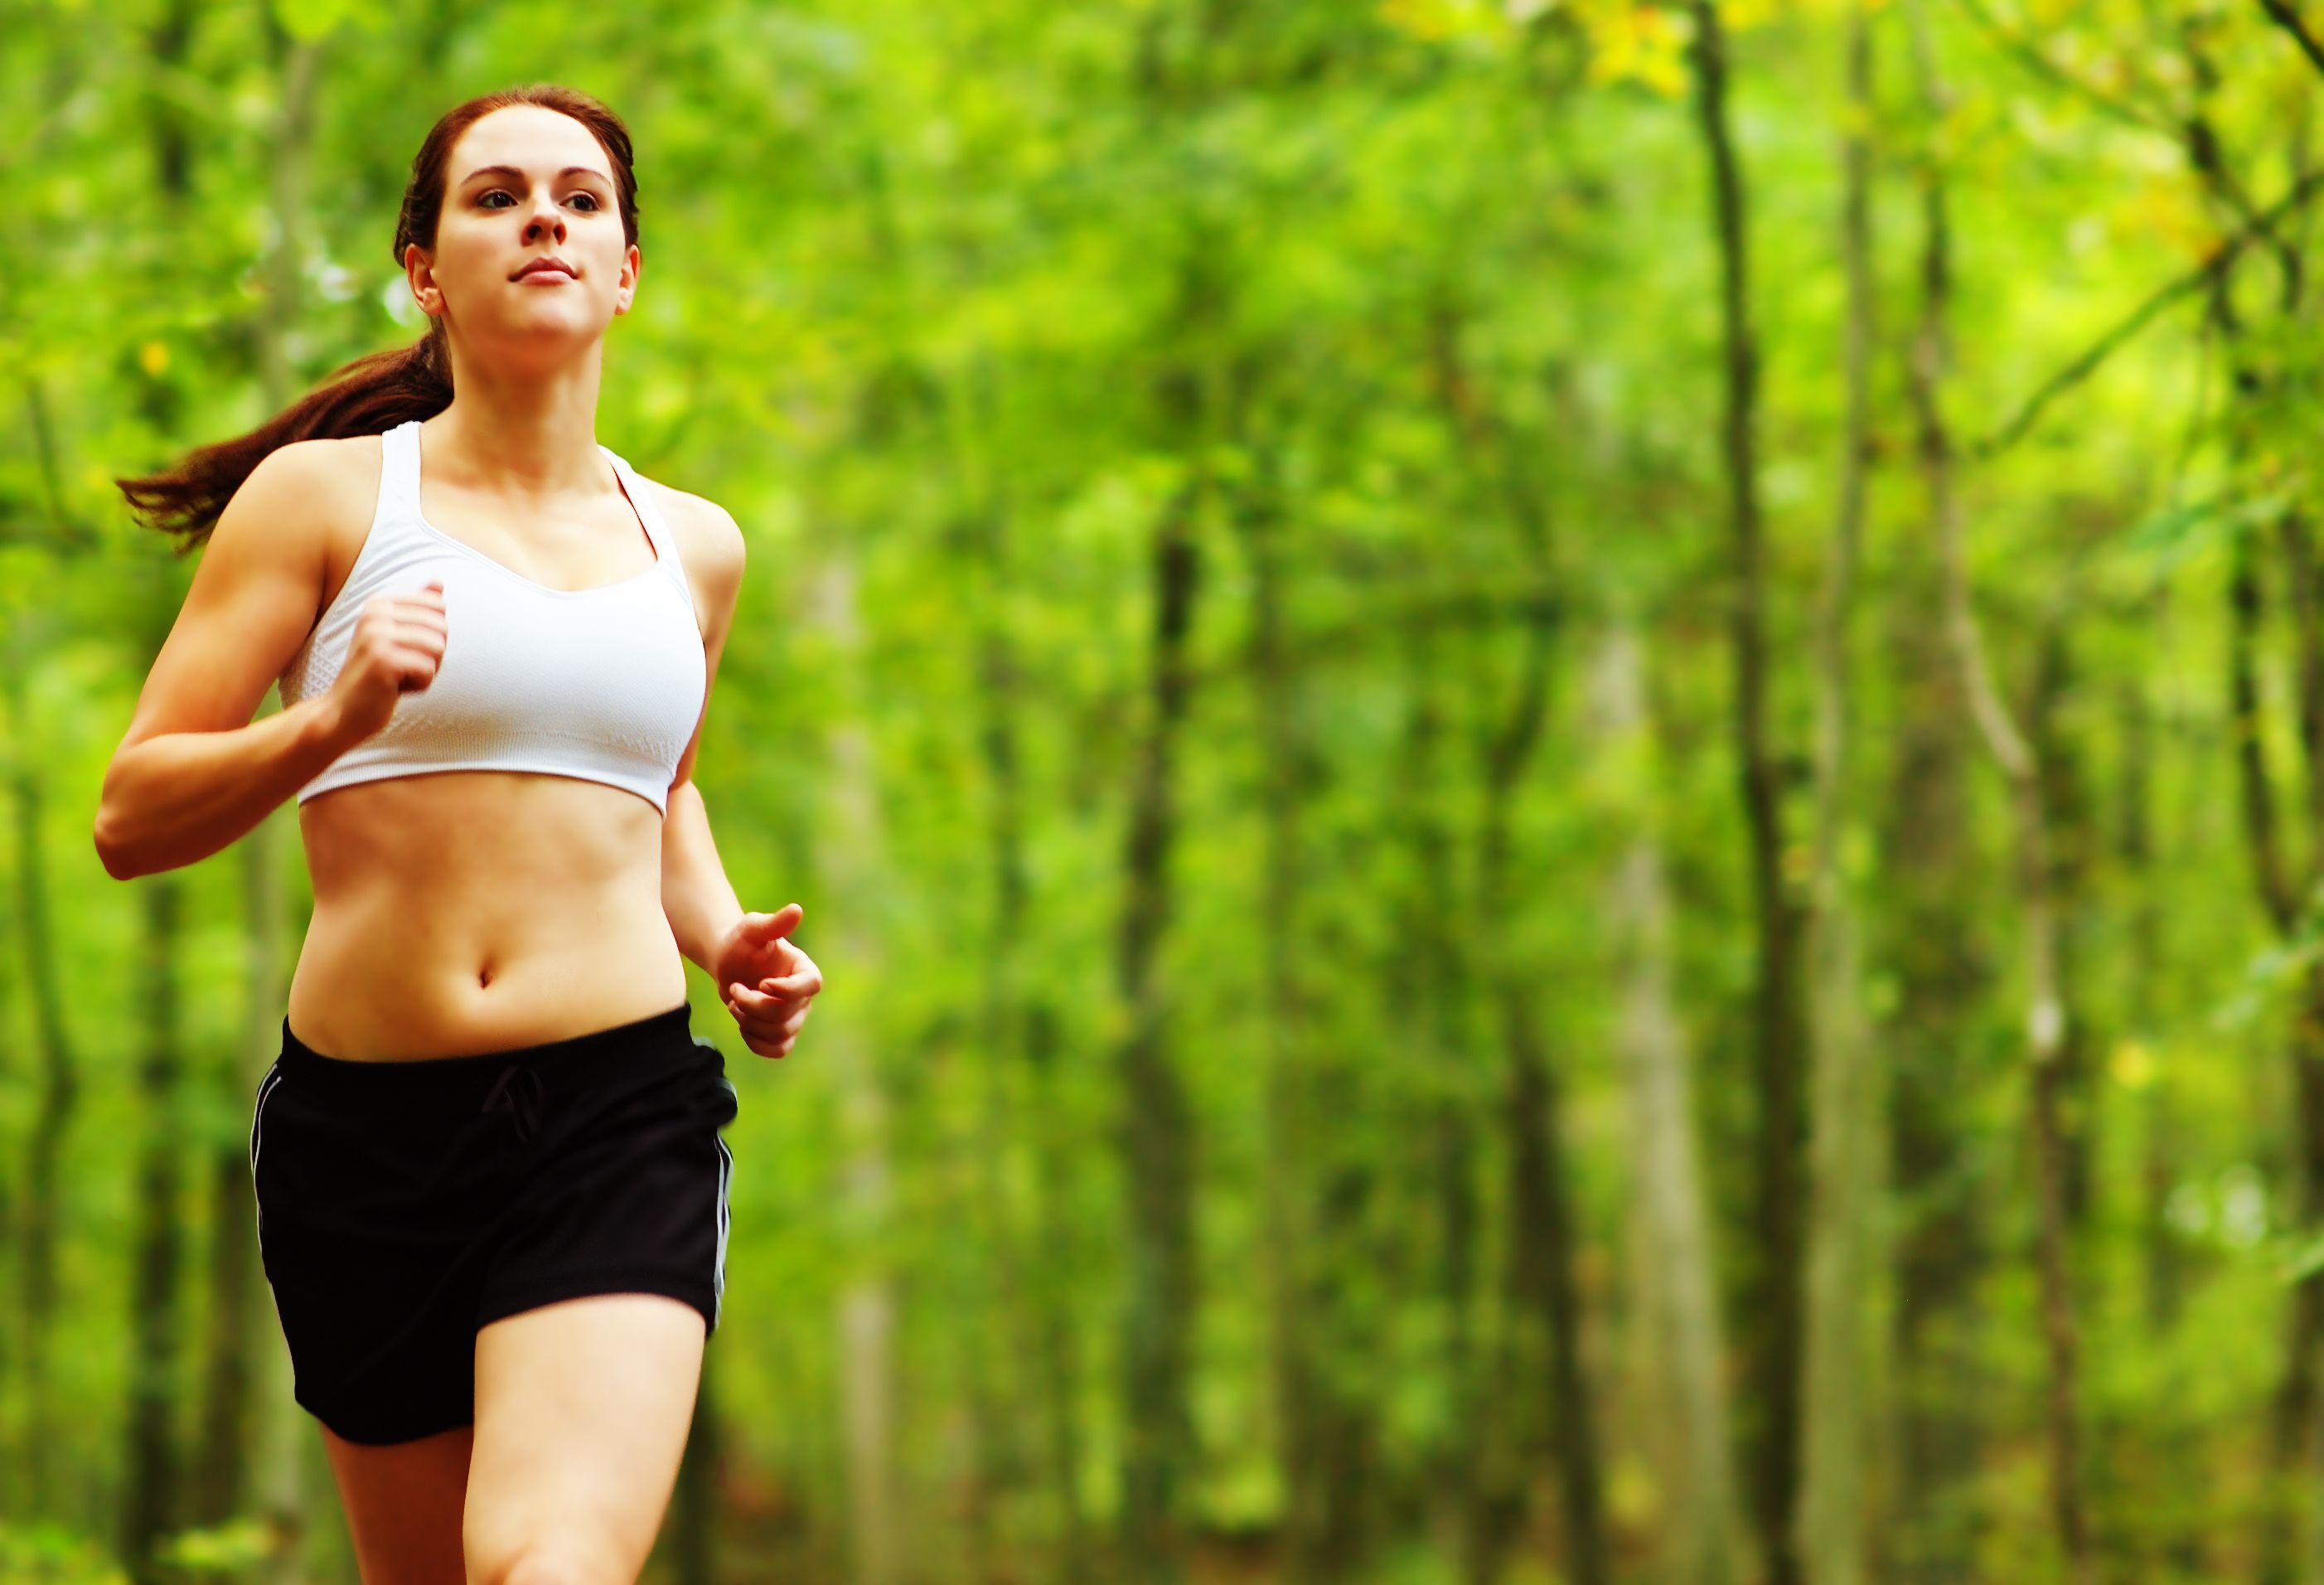 Девушка после пробежки. Утренняя пробежка. Девушка бежит. Женщина на пробежке. Занятие спортом на природе.